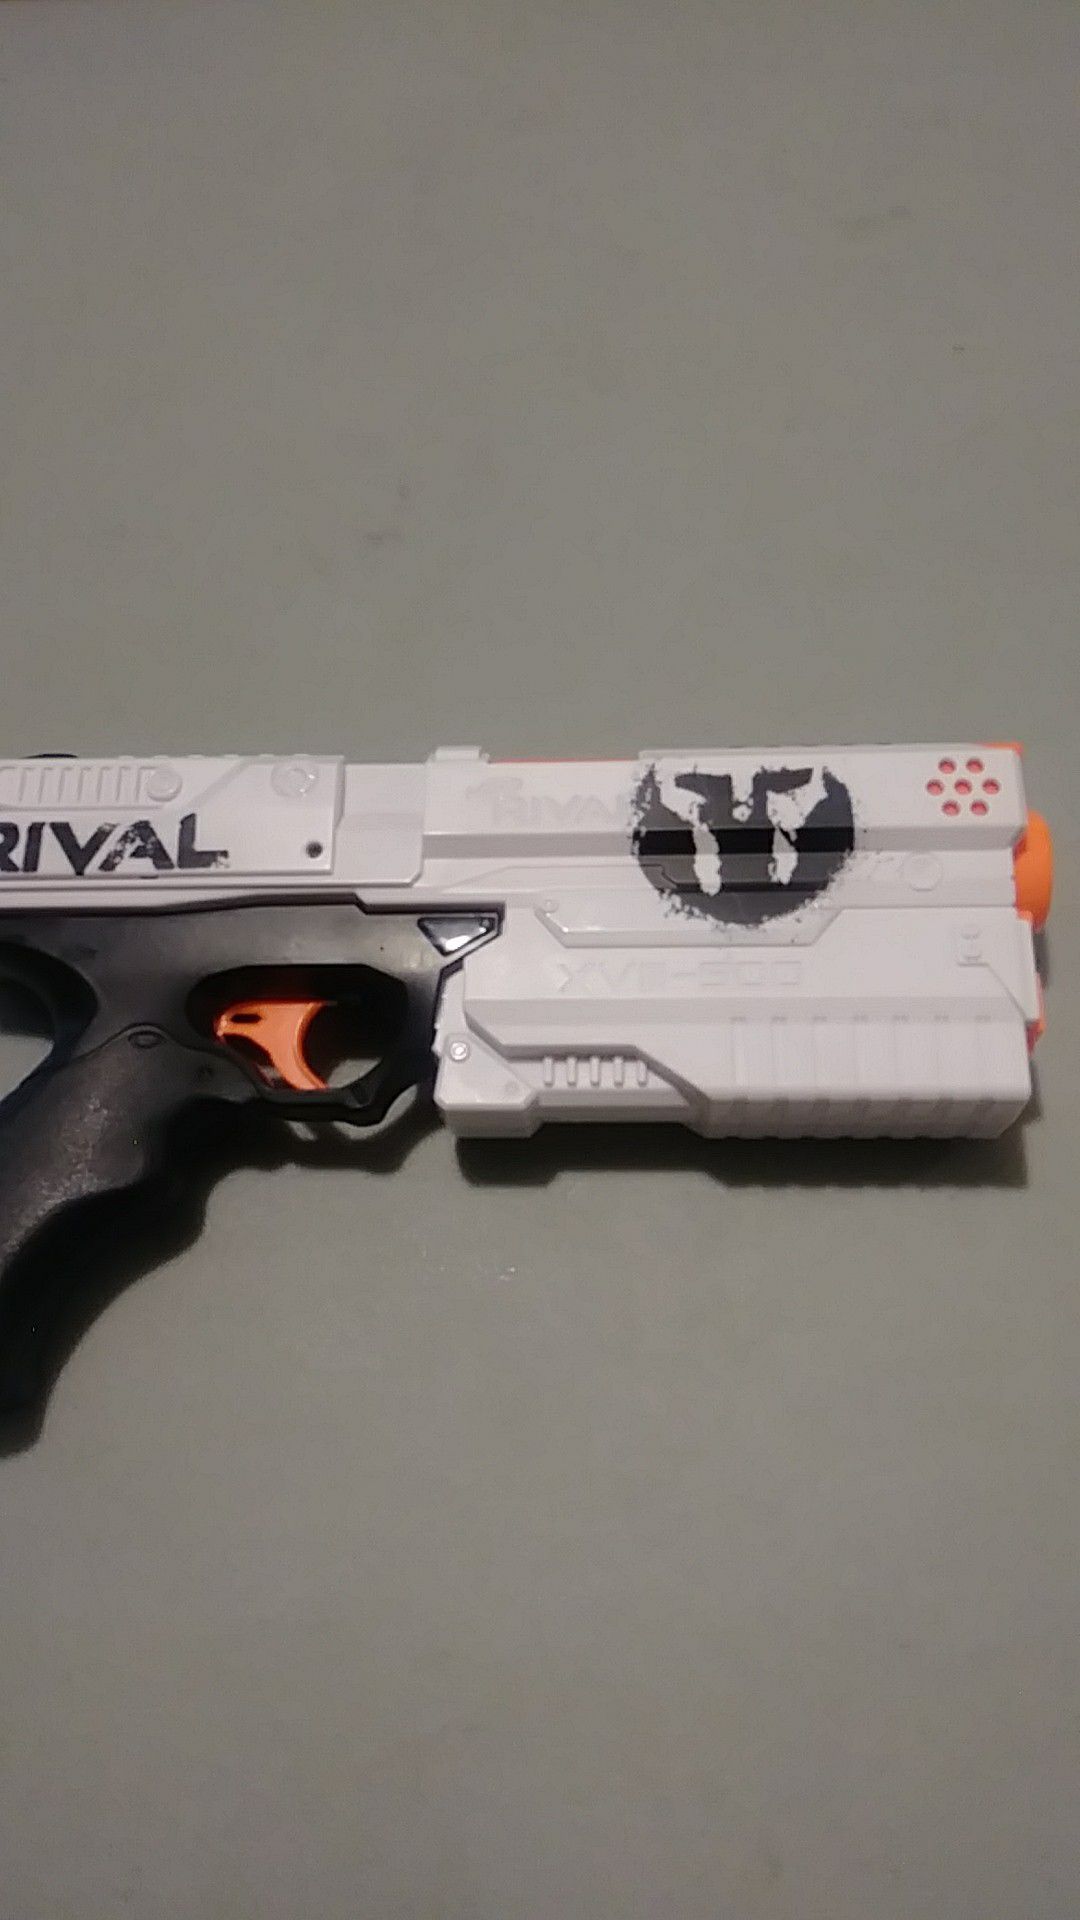 Nerf Rival XVIII-500 toy dart gun.